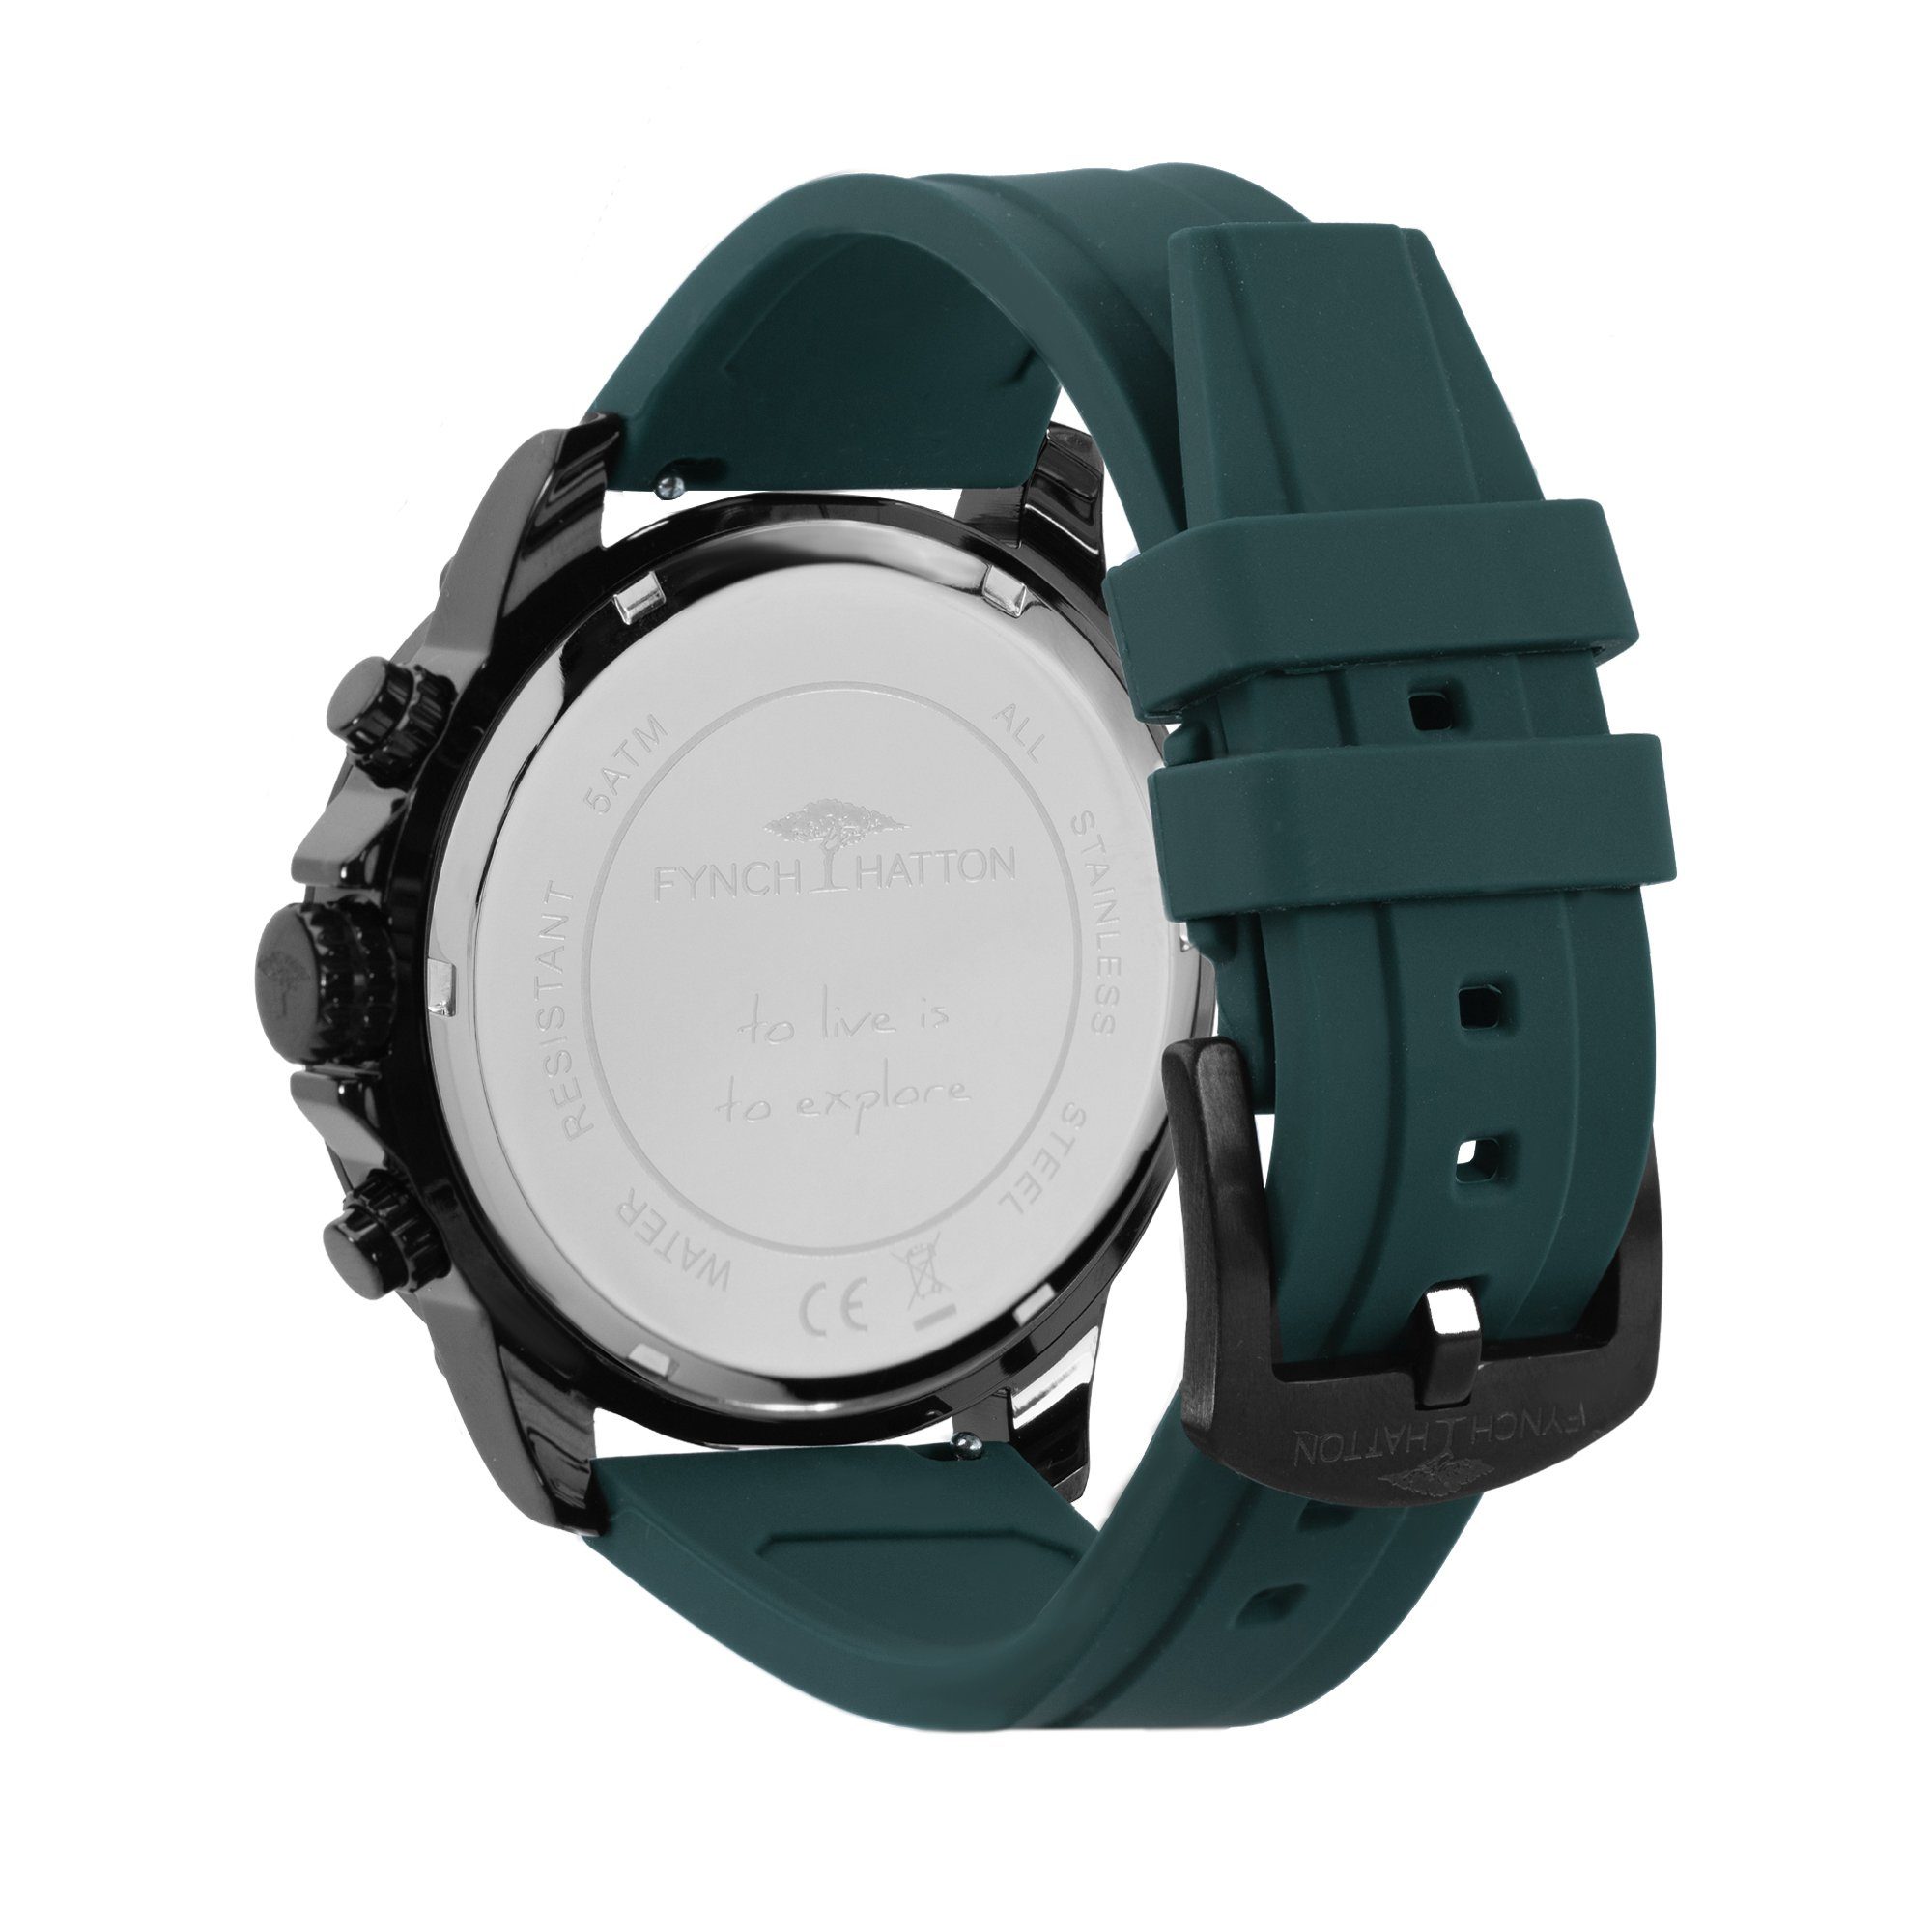 Armbanduhr Chronograph FYNCH-HATTON grün